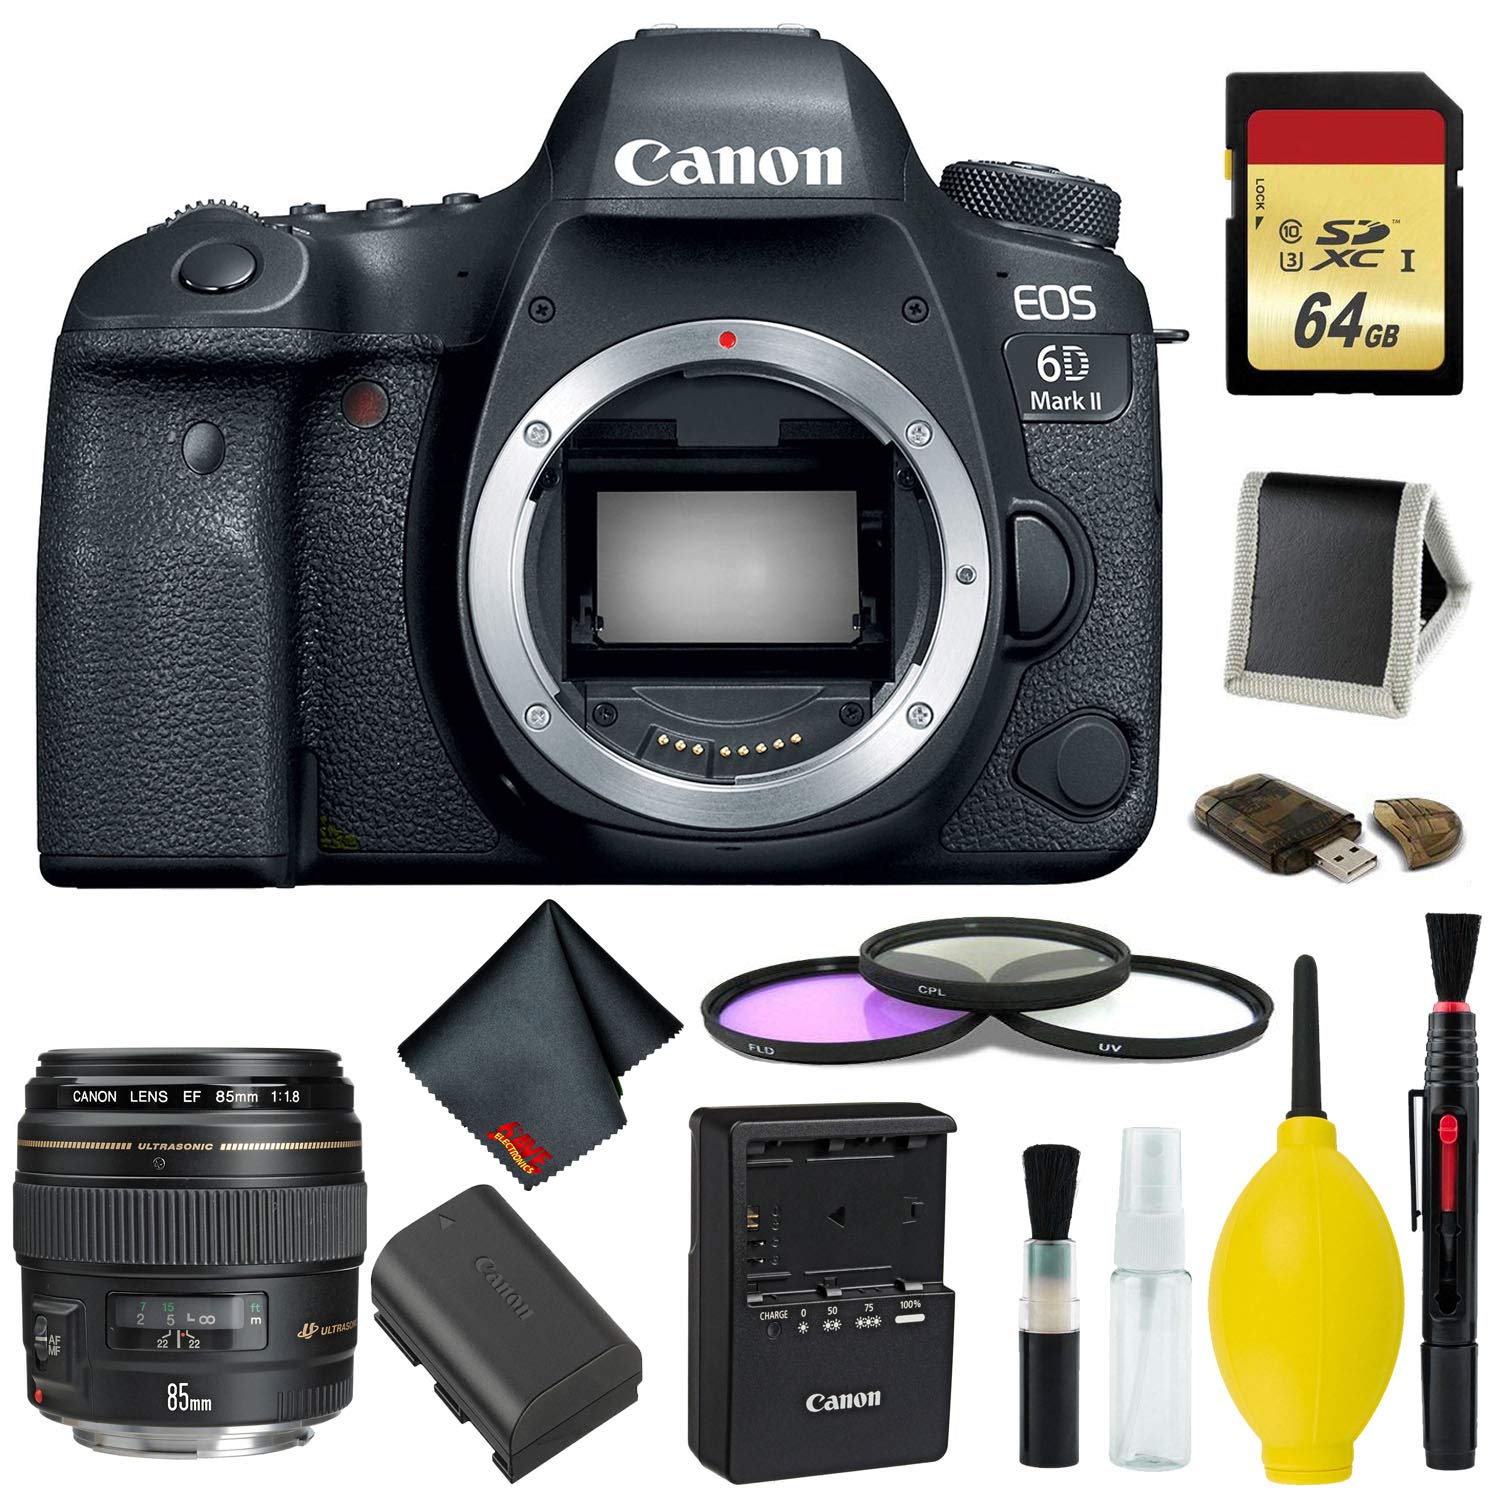 Canon EOS 6D Mark II DSLR Camera Body Only Complete Kit (International Model) w/Canon EF 85mm f/1.8 USM Lens - Internati